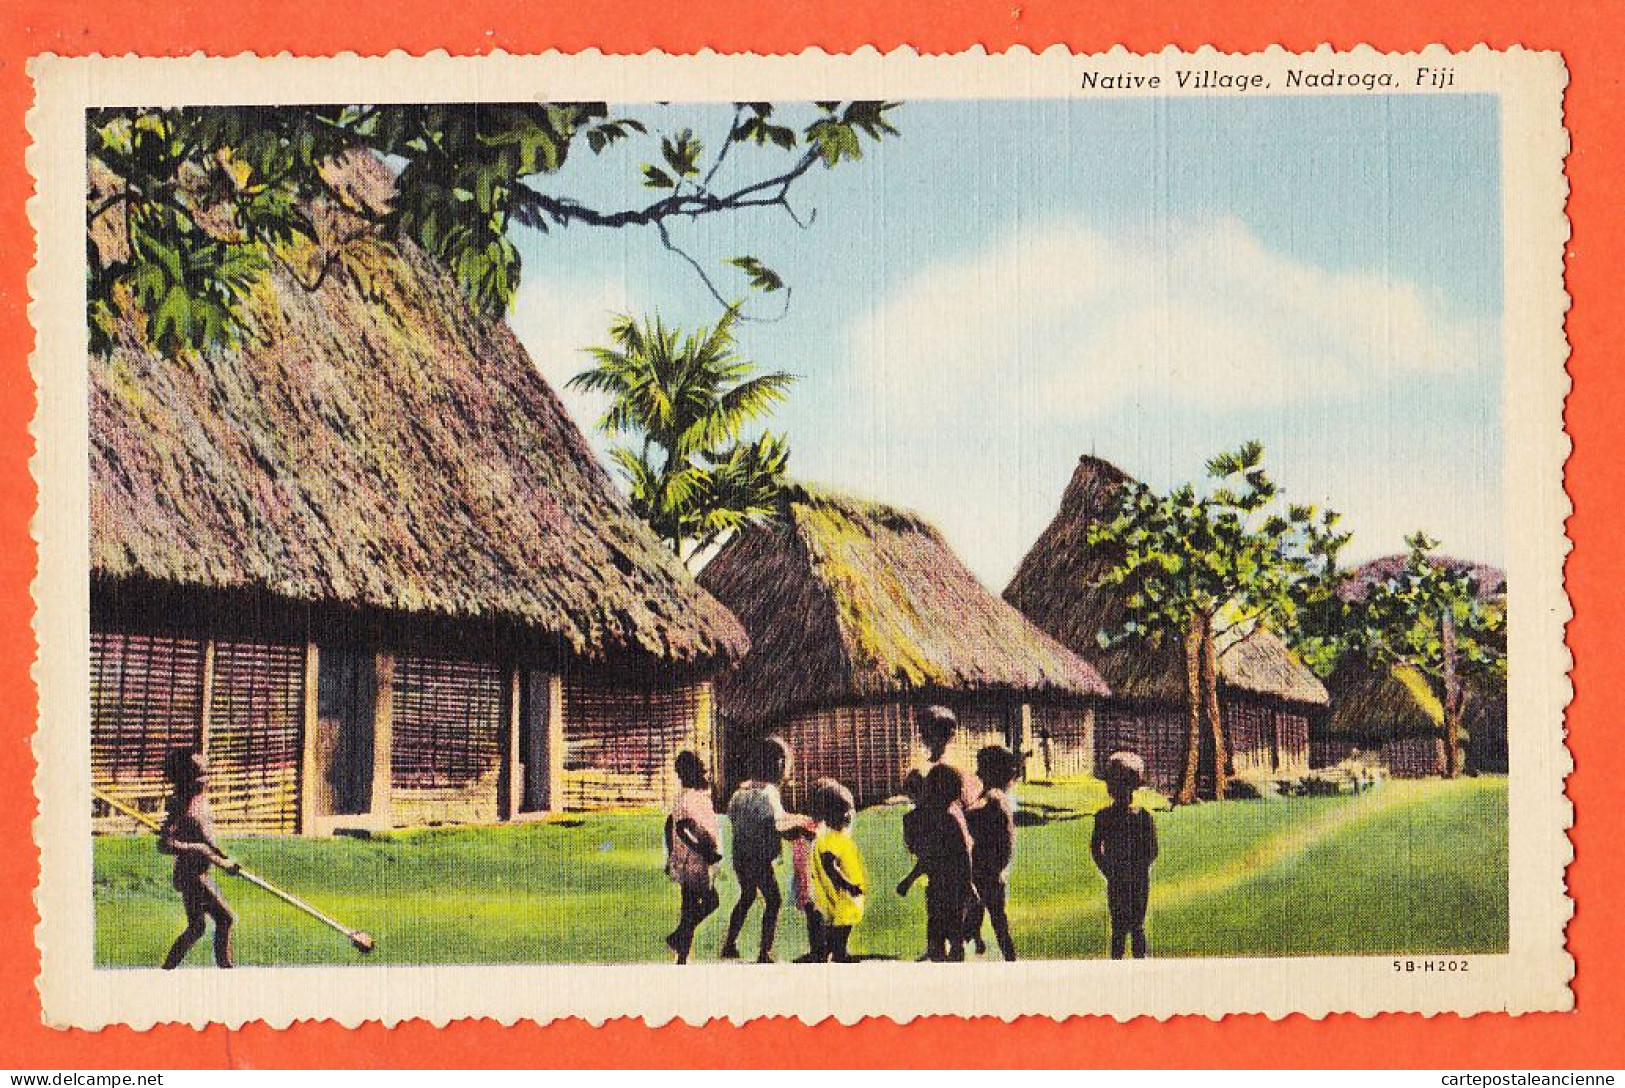 08098 ● ● NADROGA Fiji Native Village 1930s Fidji 5B-H202 - Fidji